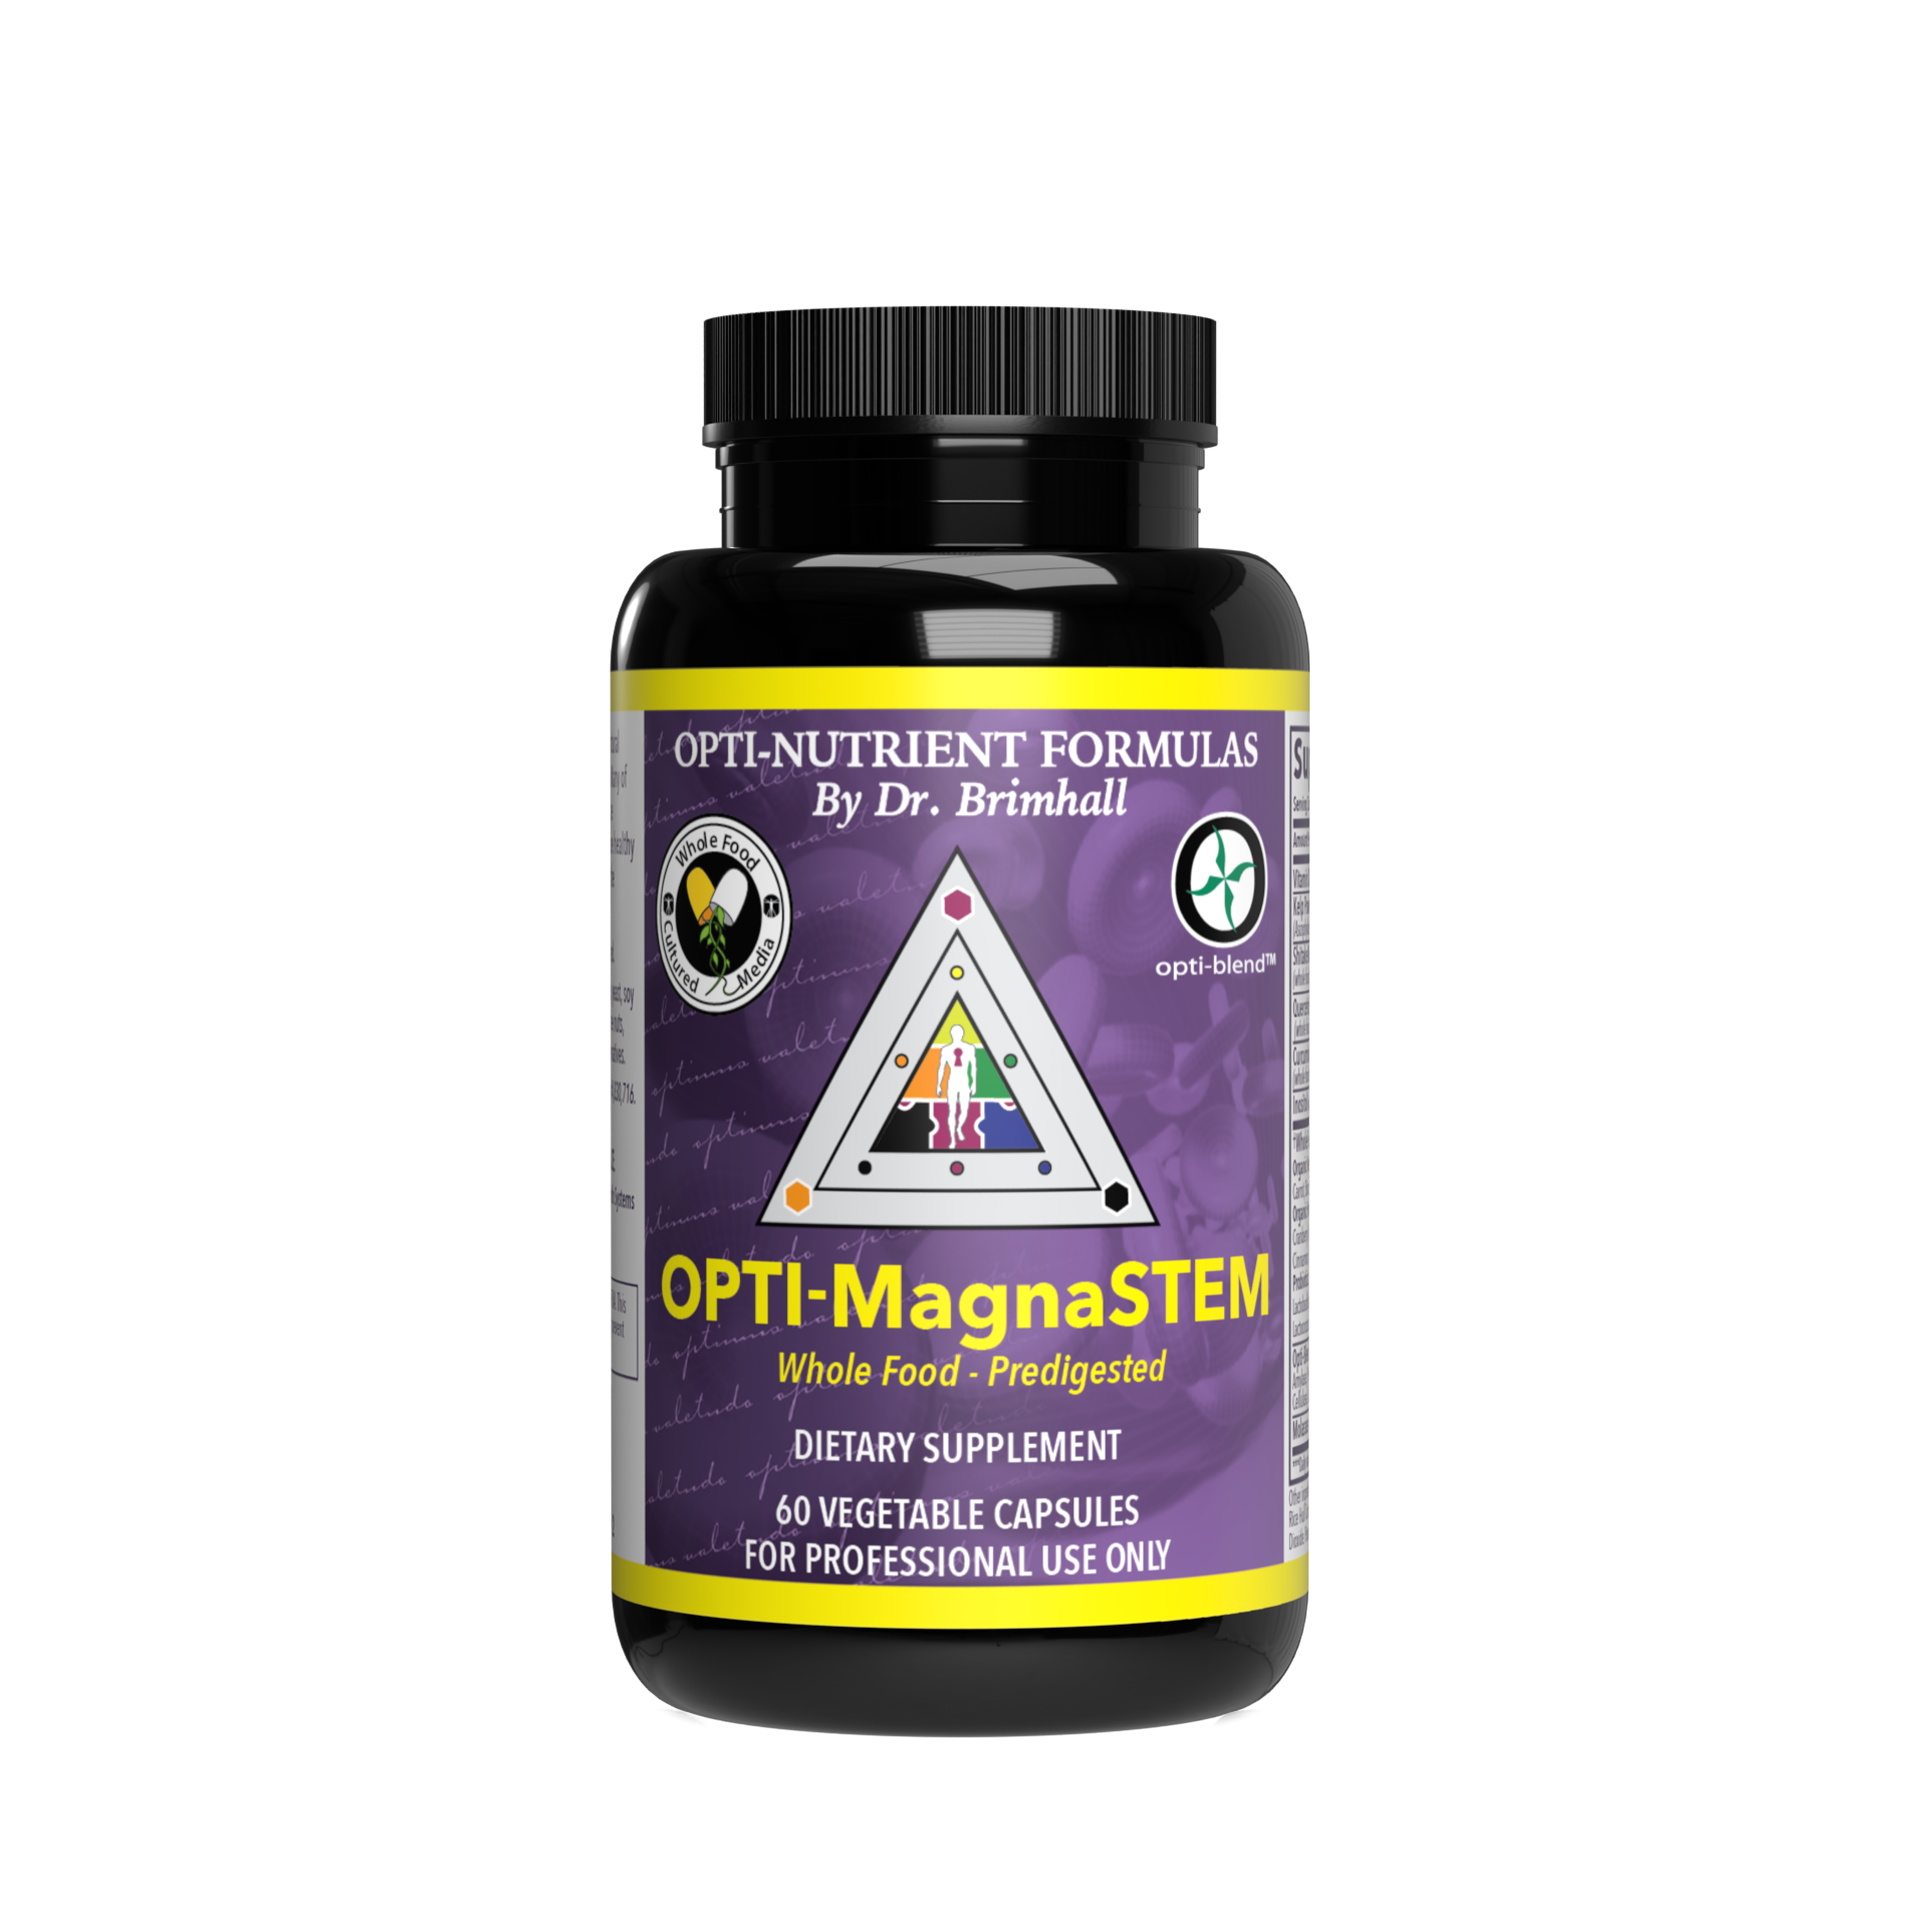 Image of a bottle of Opti-Nutrients Opti-MagnaSTEM.